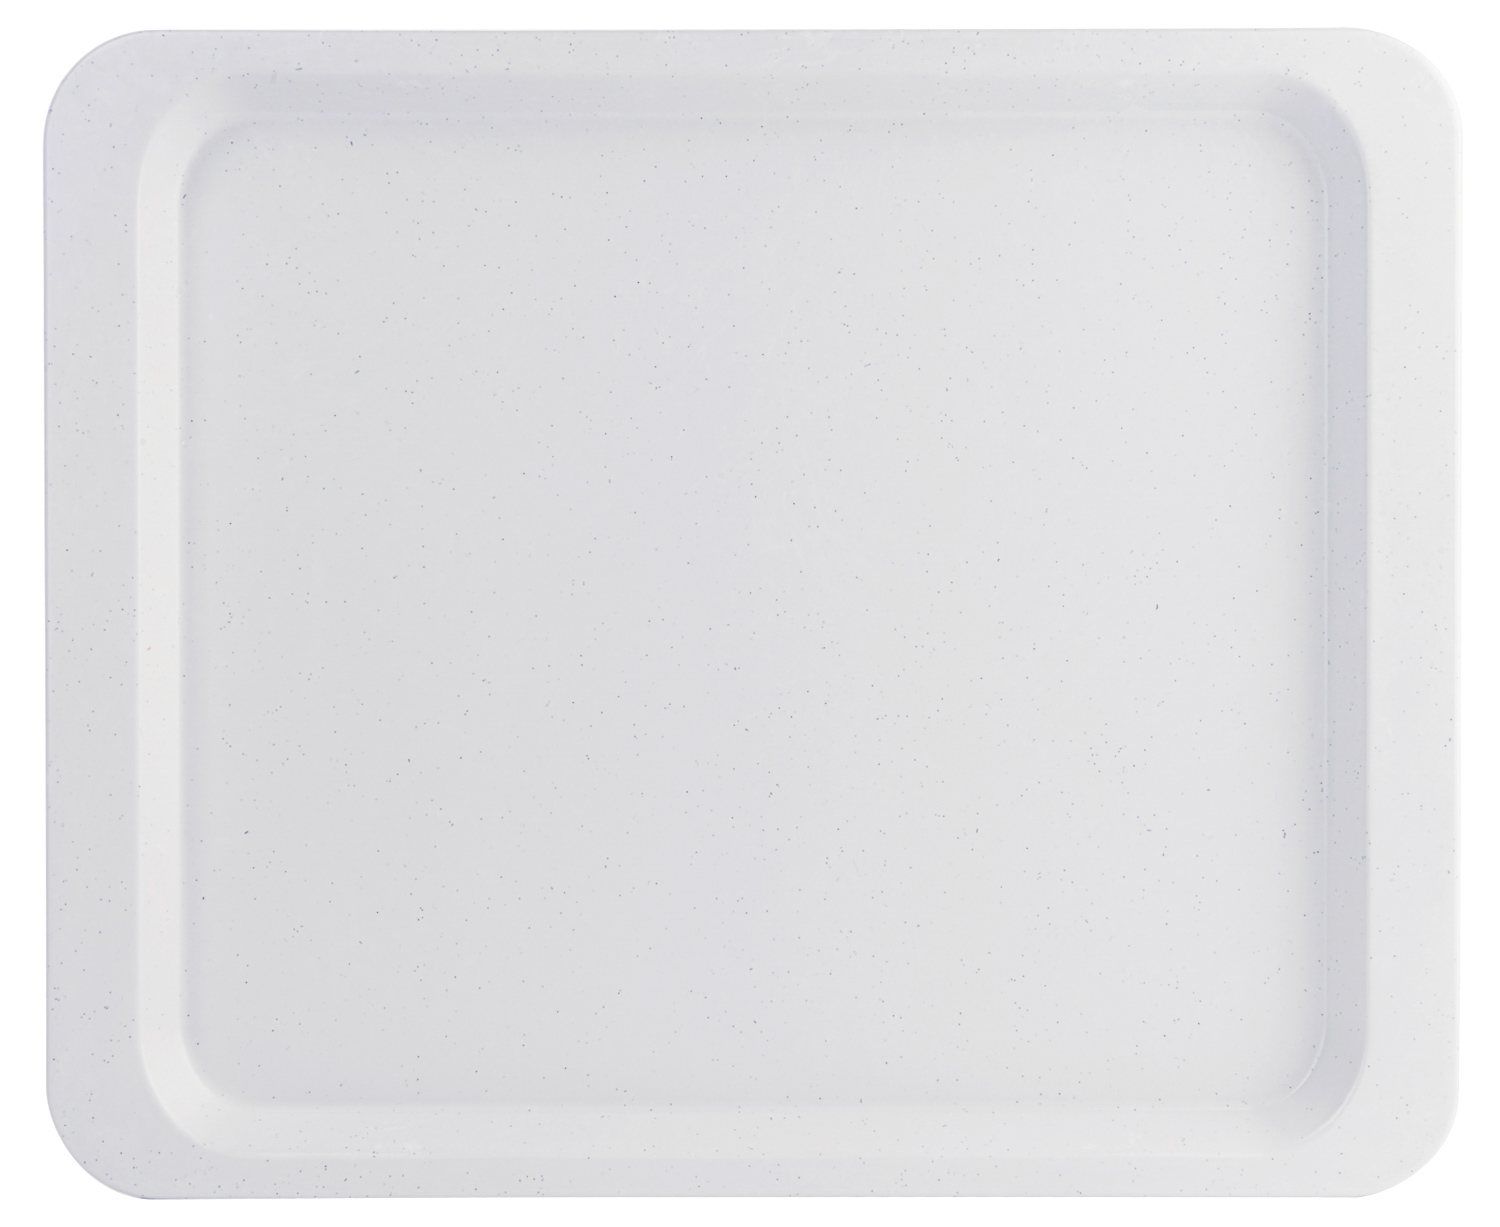 Tablett EASY GastroNorm GN 1/2,Farbe: lichtgrau glasfaserverstärktem Polyesterharz, spülmaschinenfest, robust, formbeständig,